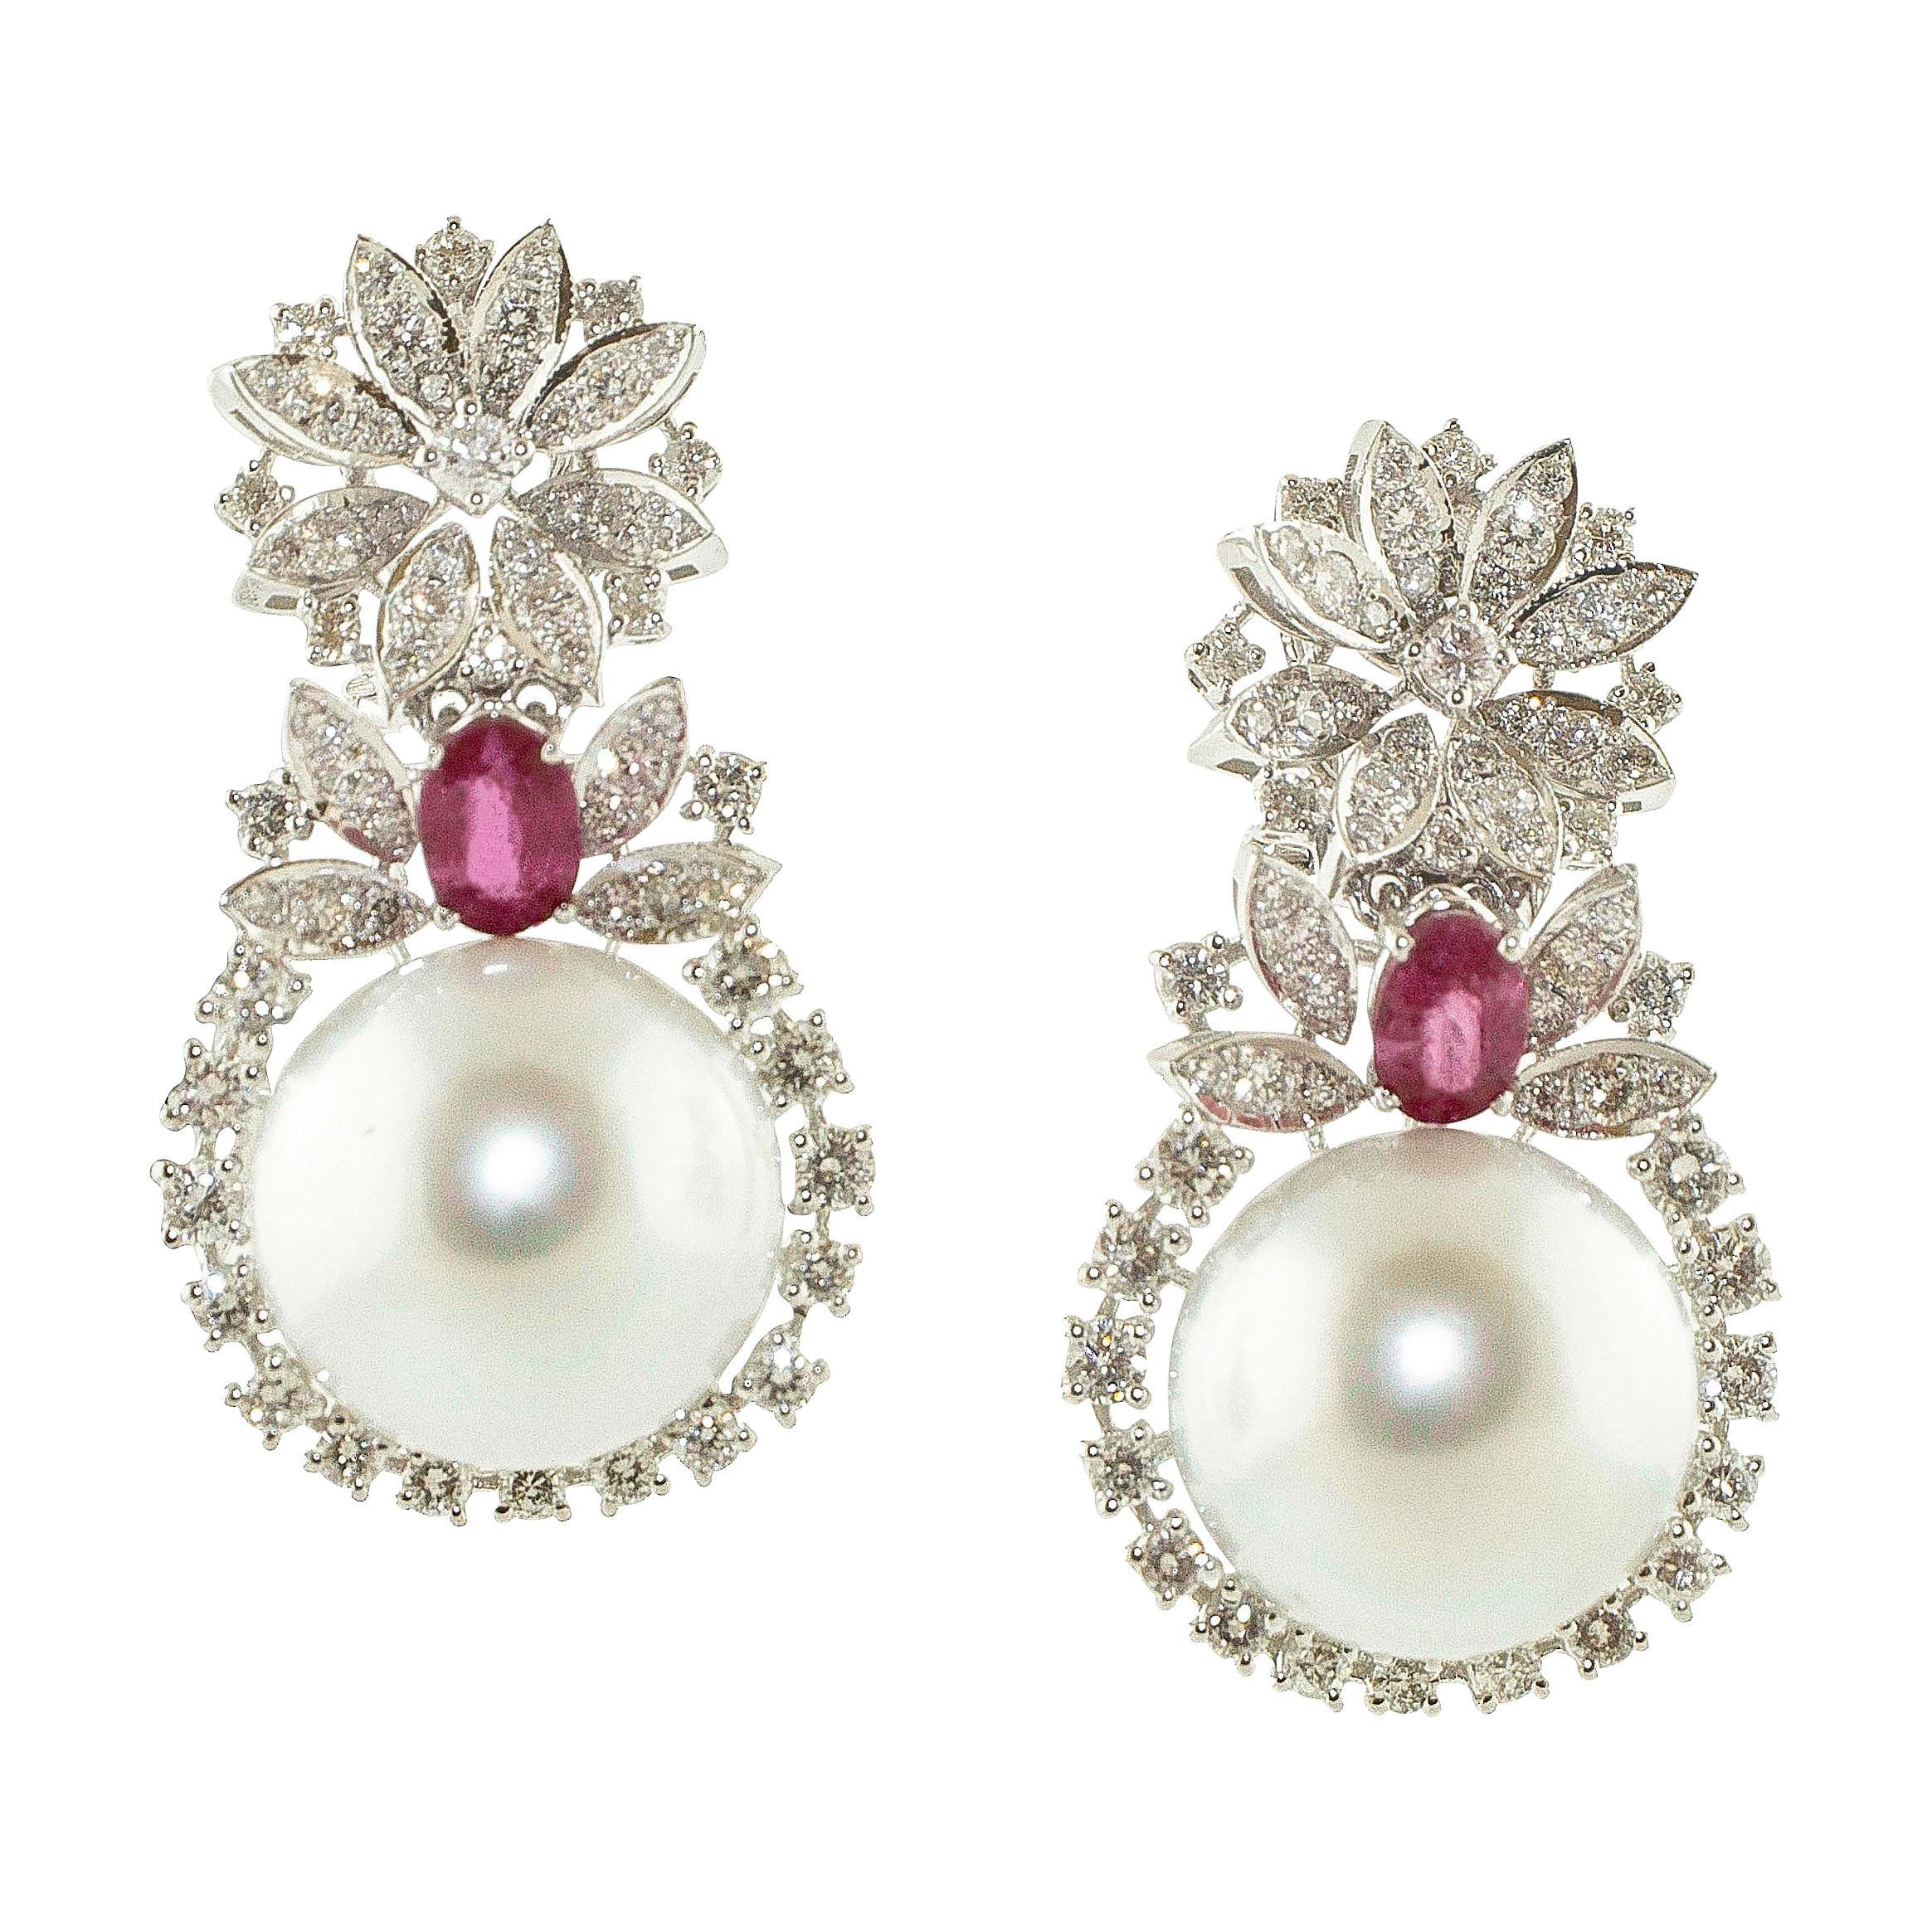 Diamonds, Rubies, Pearls, 18 Karat White Gold Fashion Earrings